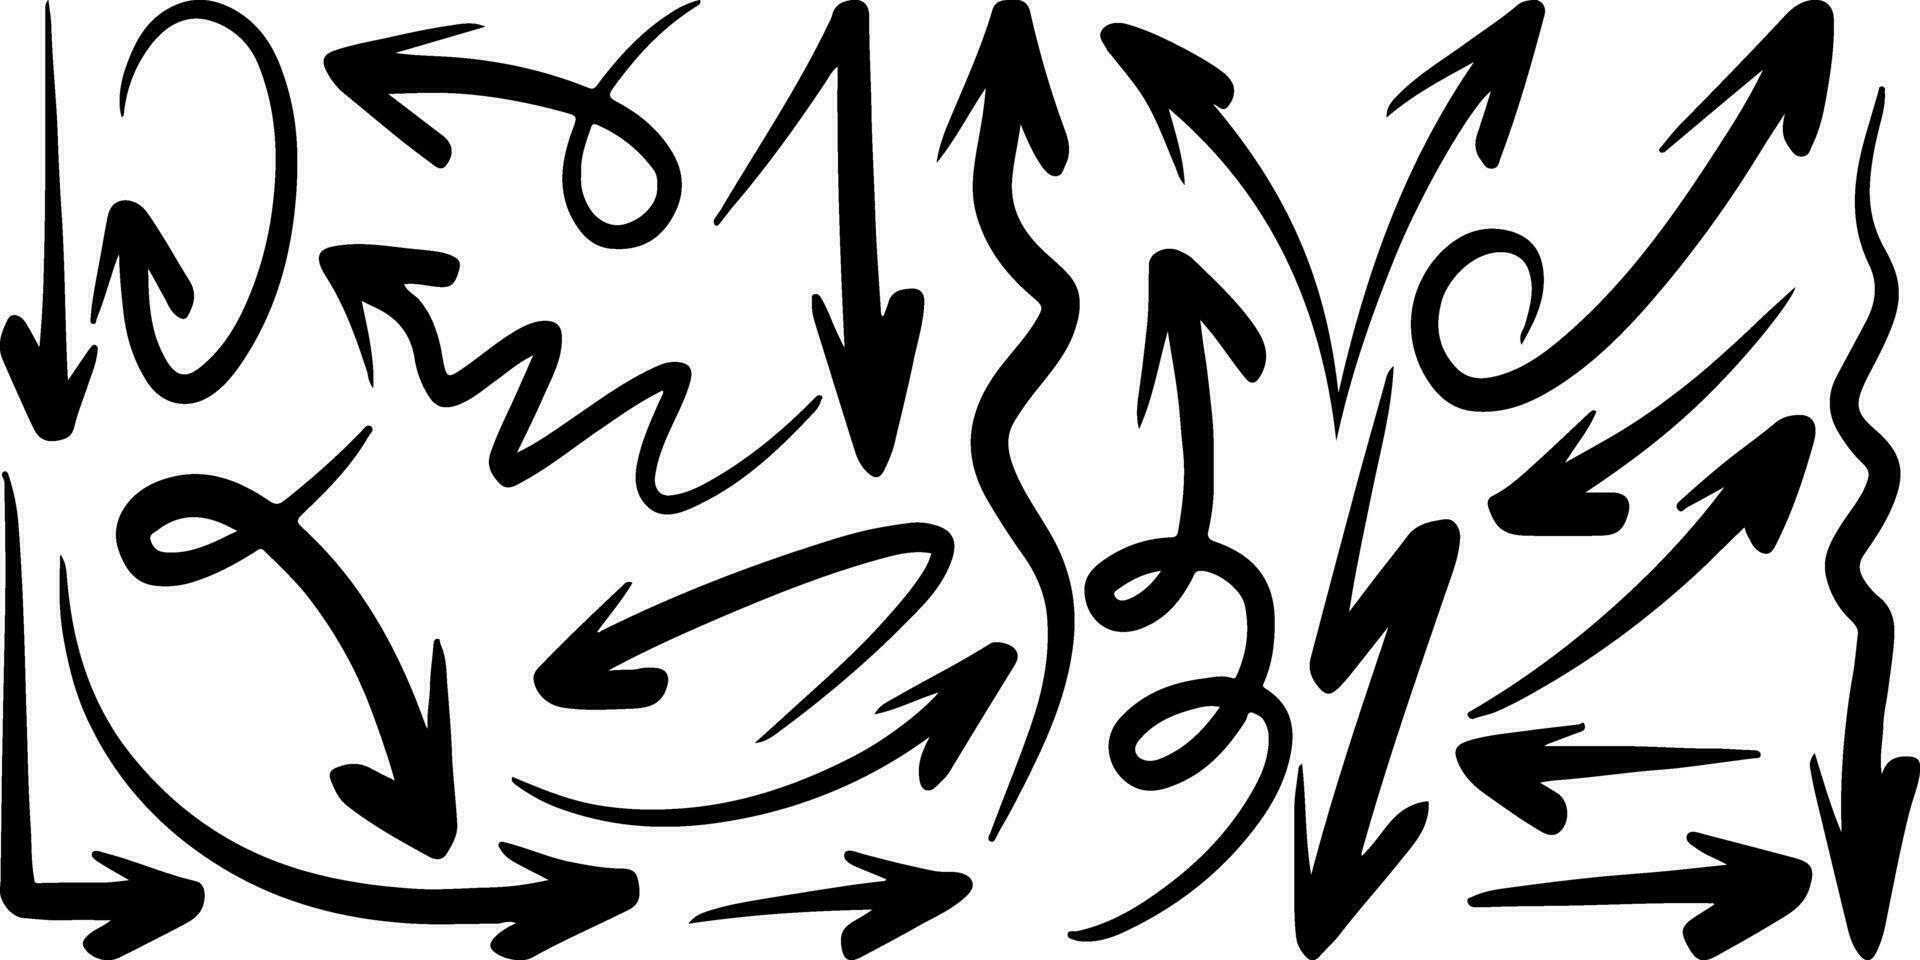 Set of Hand drawn vector arrows doodle on white background. design element vector illustration.